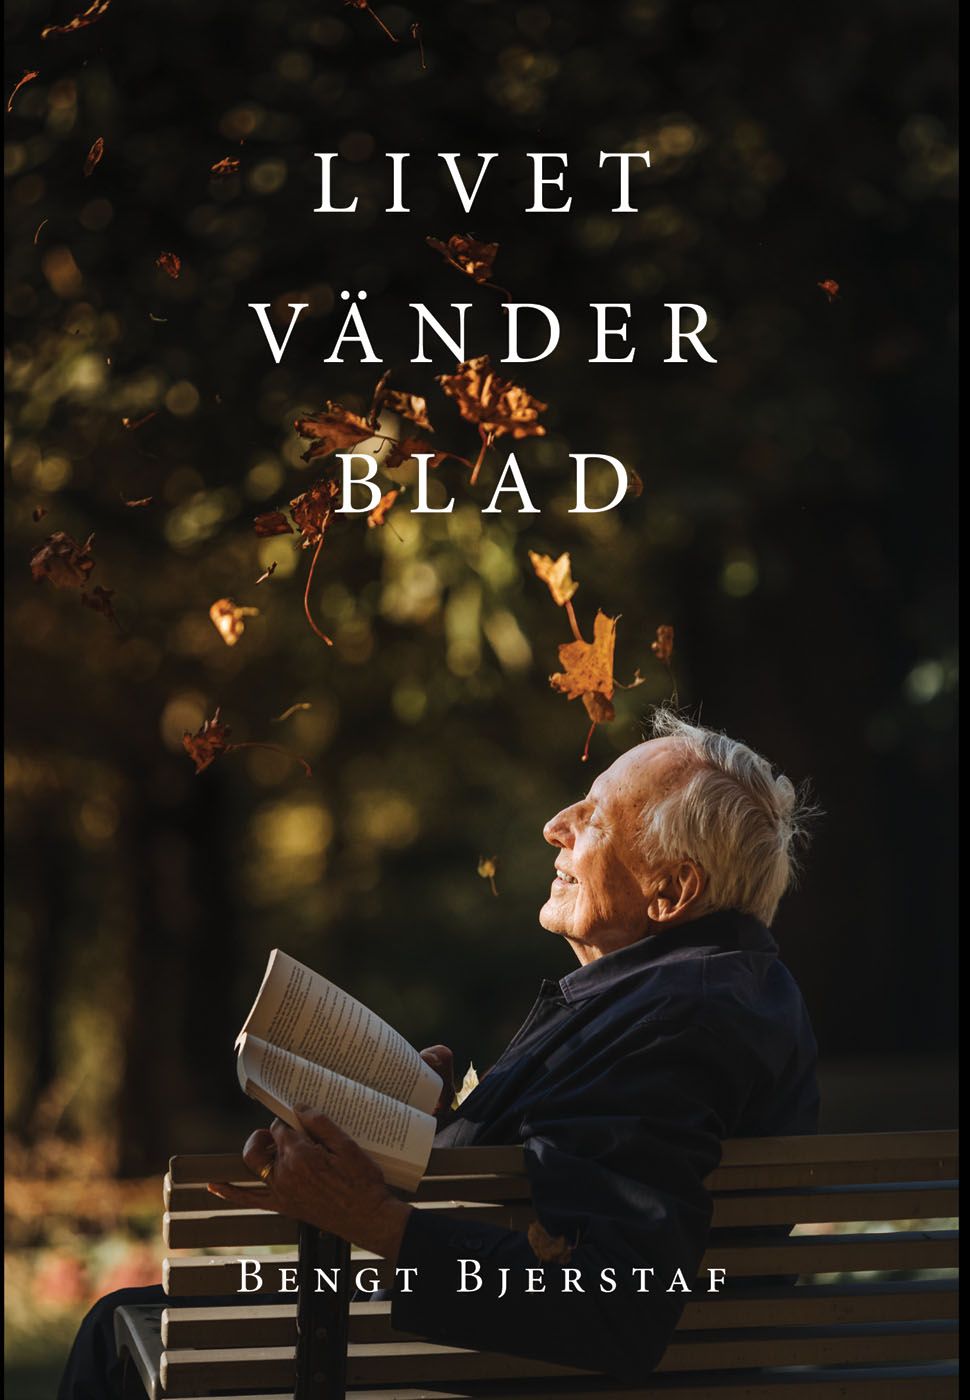 Livet vänder blad, eBook by Bengt Bjerstaf